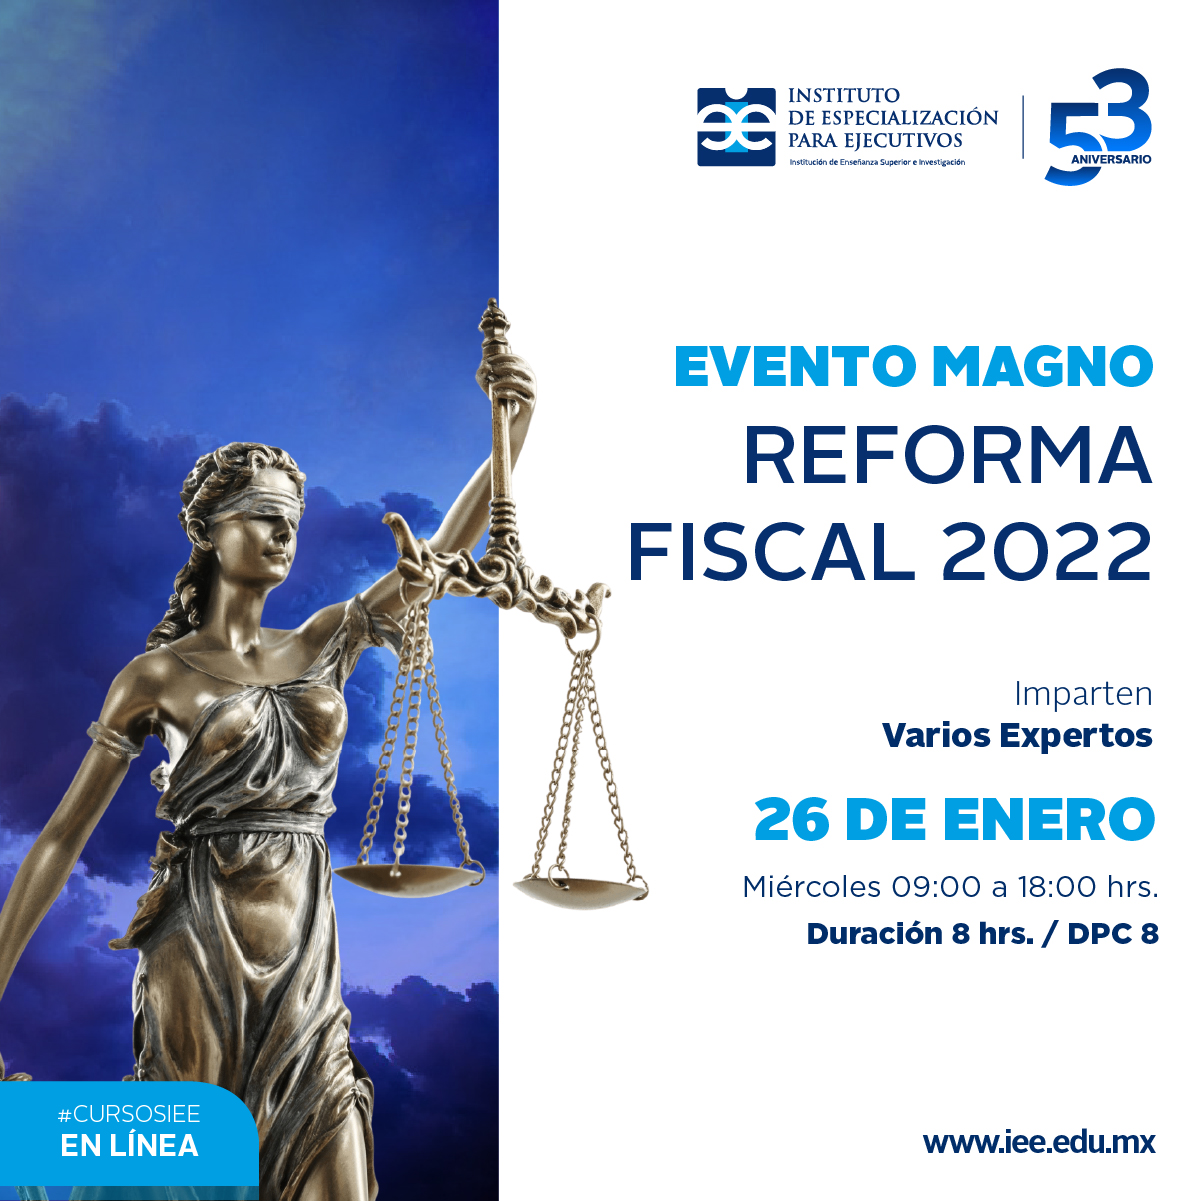 Evento Magno en Línea en Evento Magno Reforma Fiscal 2022